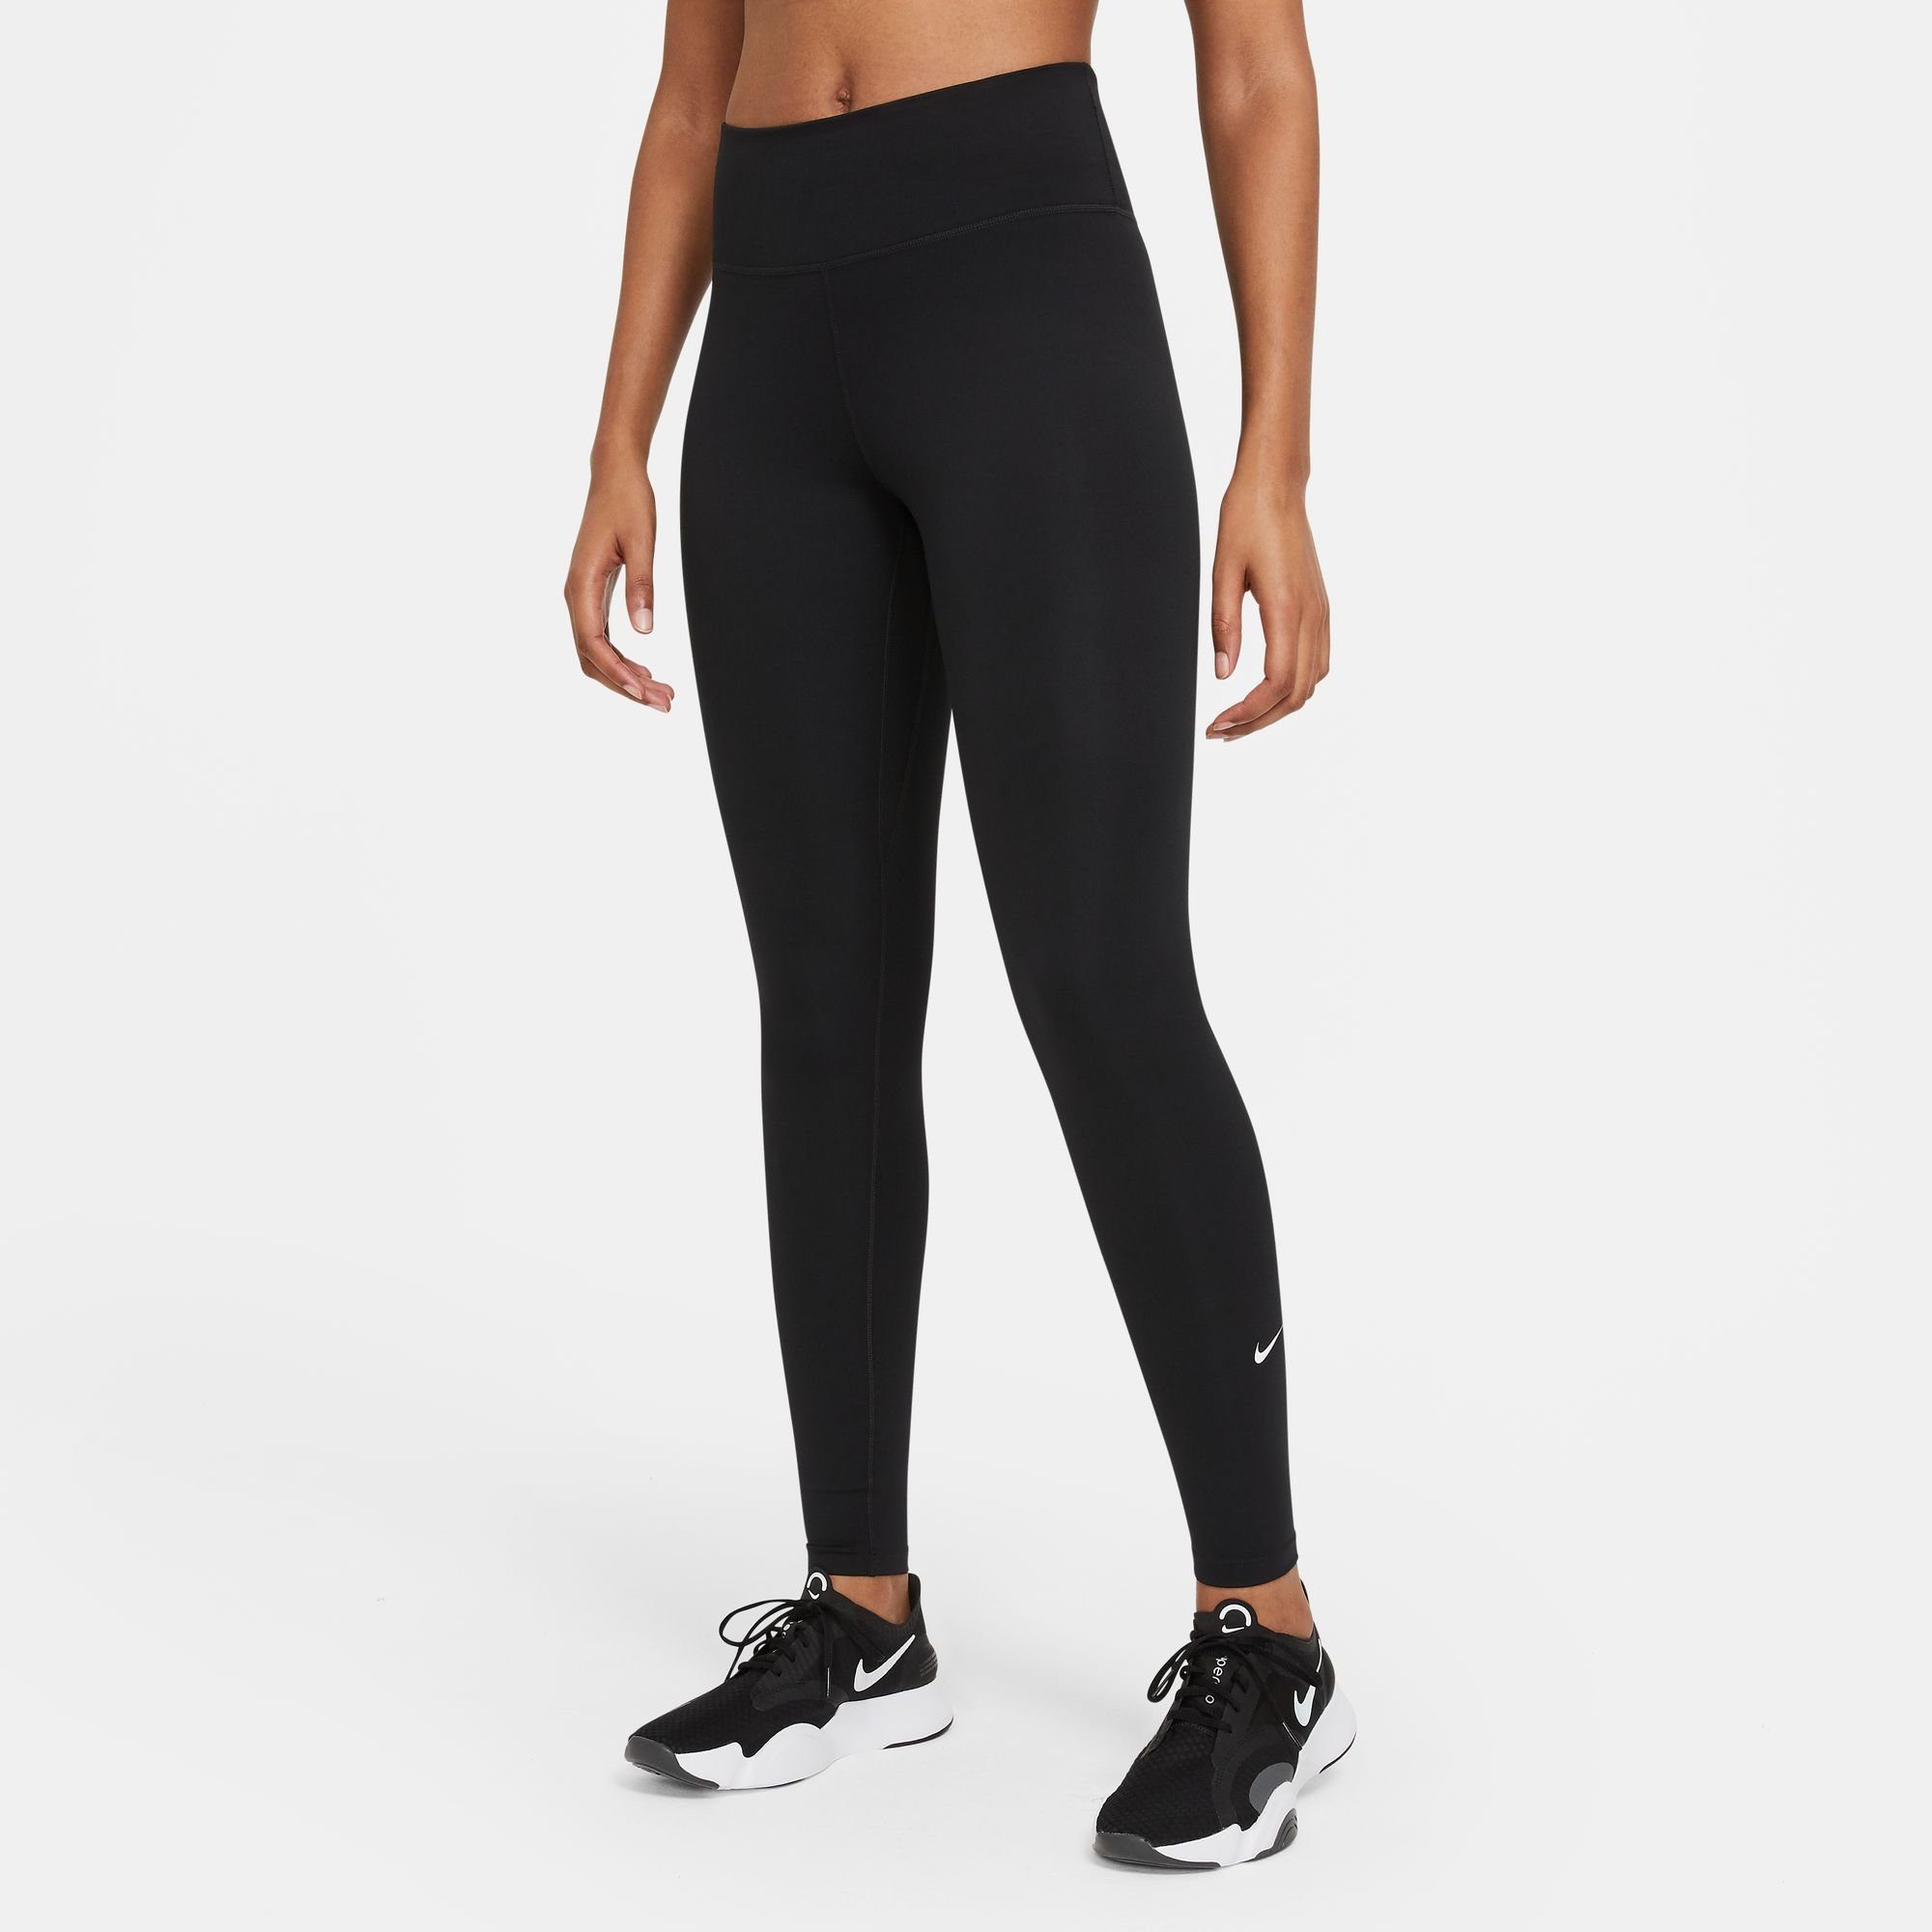 LEGGINGS Nike WOMEN'S Trainingstights MID-RISE schwarz ONE